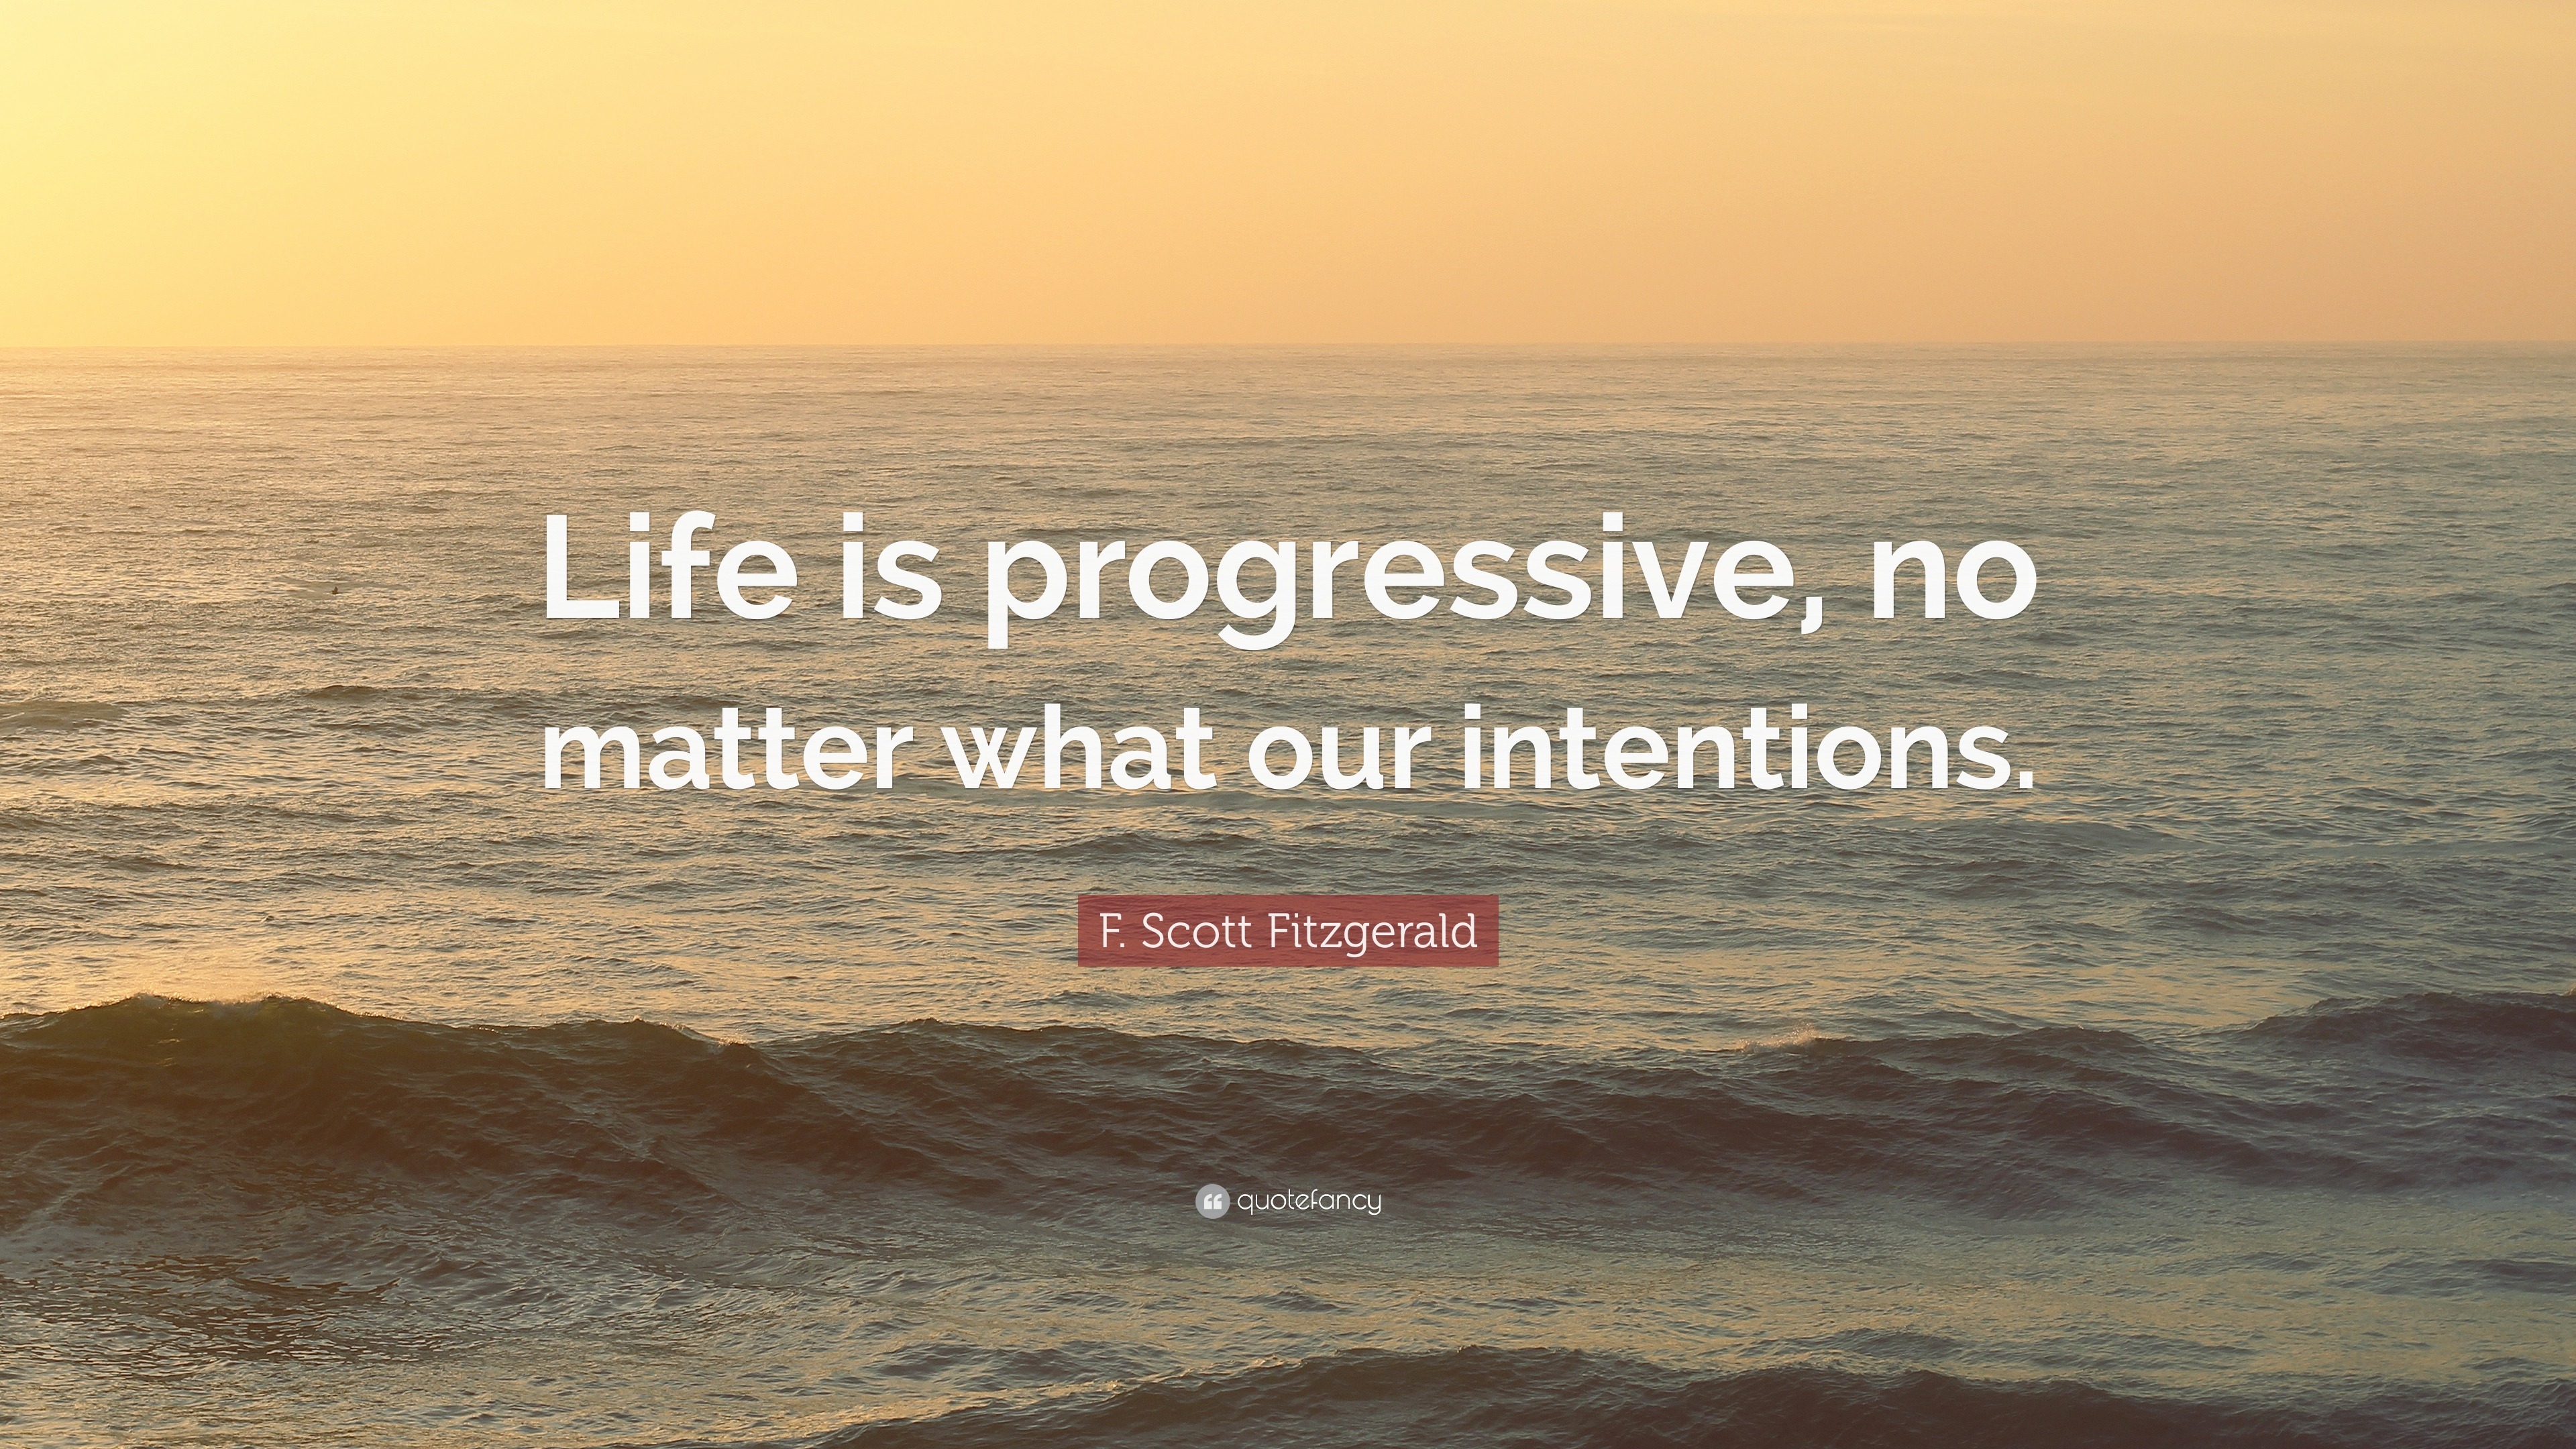 F. Scott Fitzgerald Quote “Life is progressive, no matter